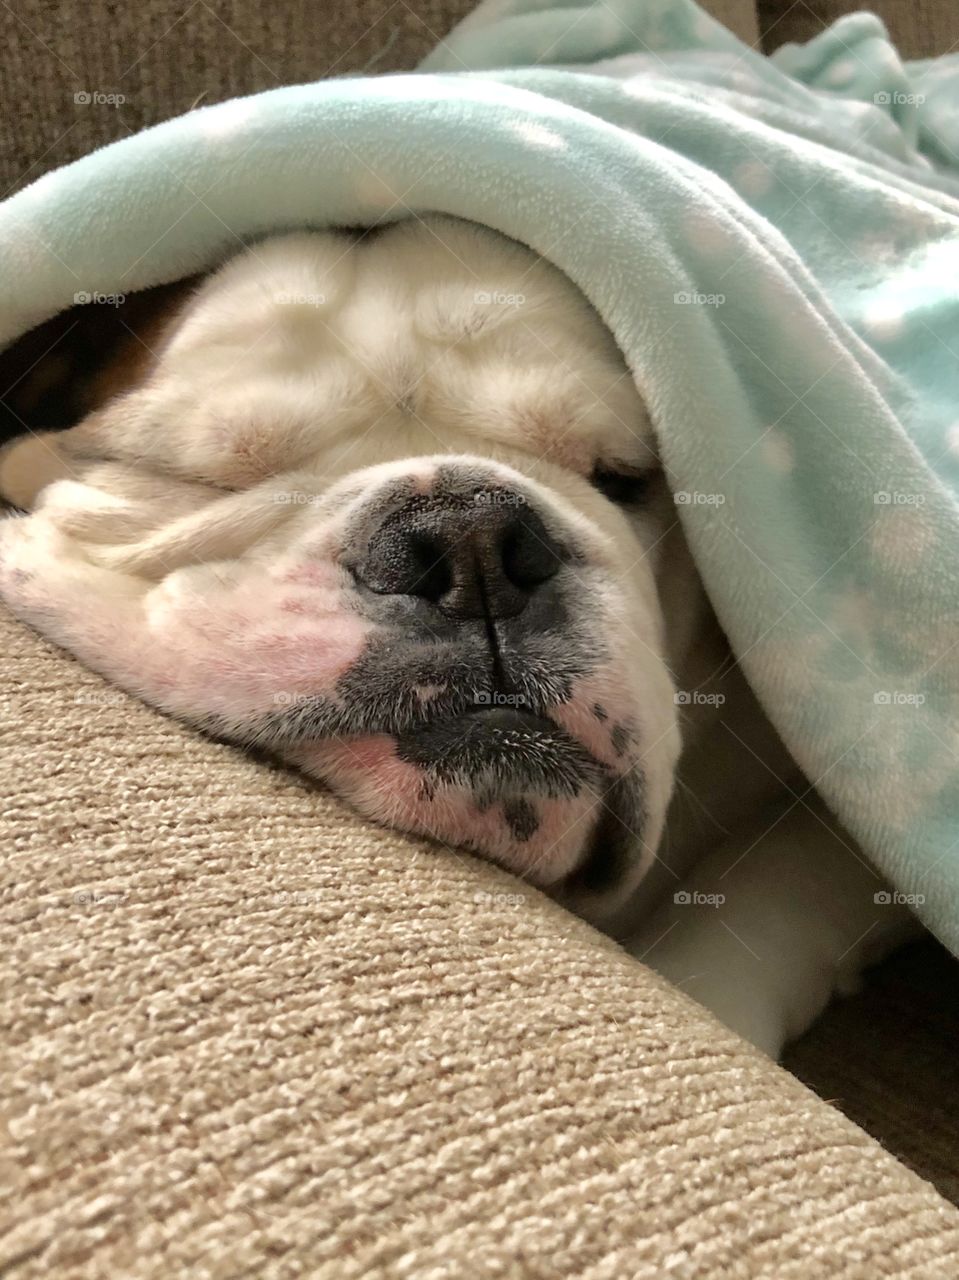 English bulldog hiding under blankets sleeping one eye opened 